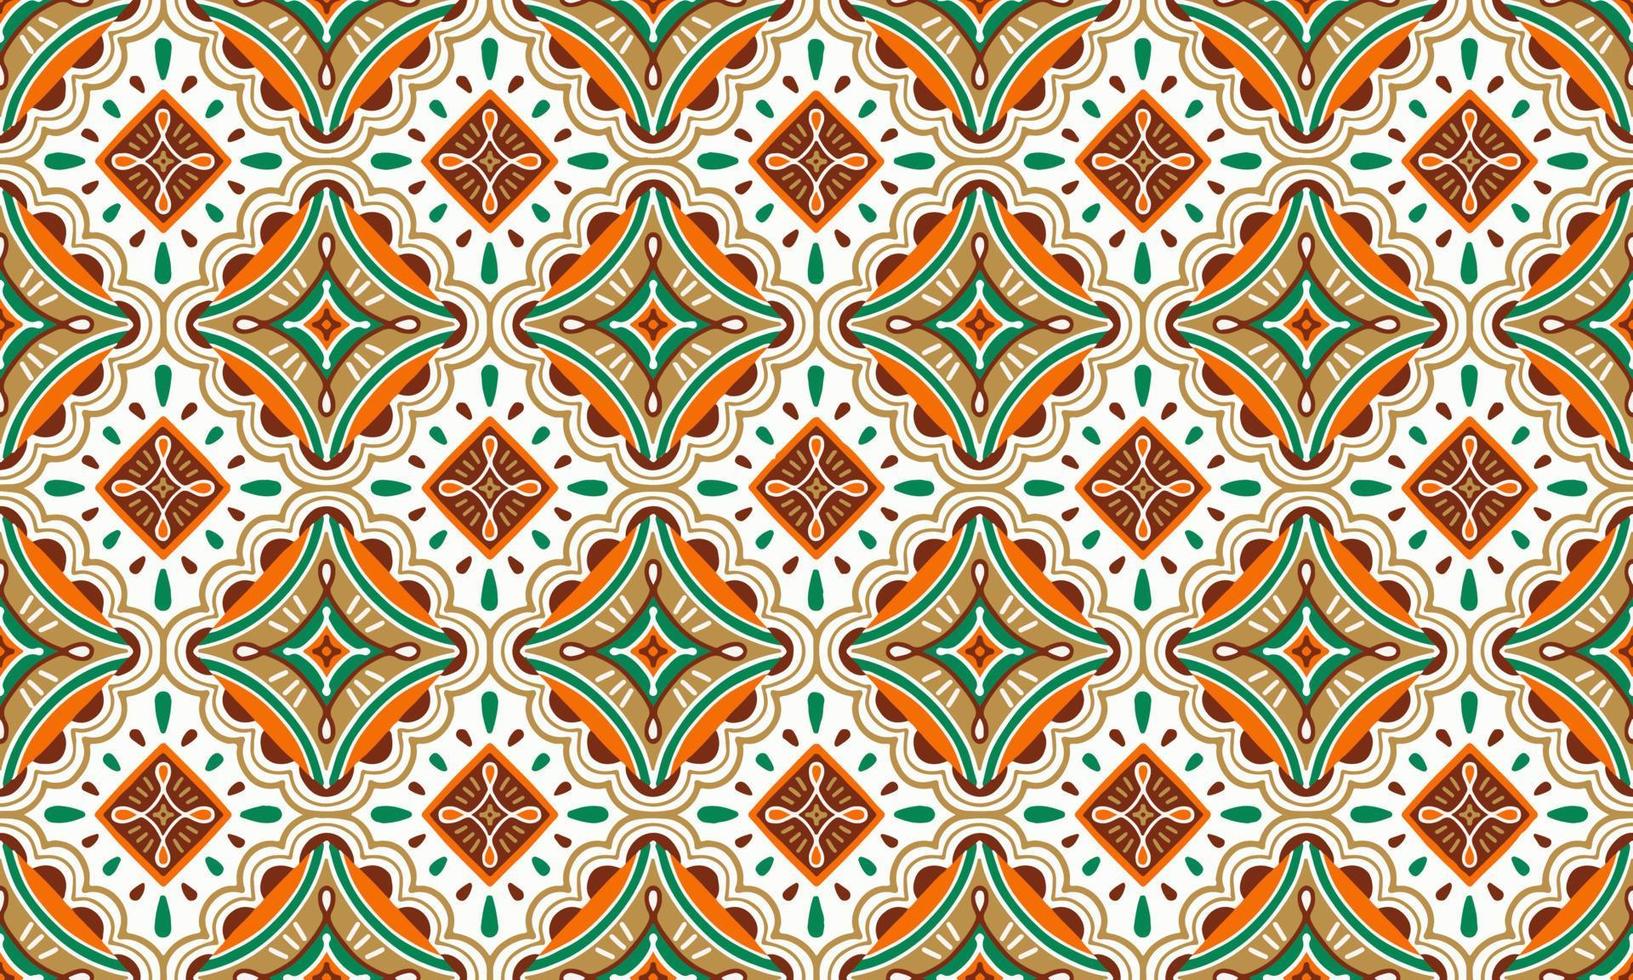 Ethnic Abstract Background cute green orange brown geometric tribal ikat folk Motif Arabic oriental native pattern traditional design carpet wallpaper clothing fabric wrapping print batik folk vector